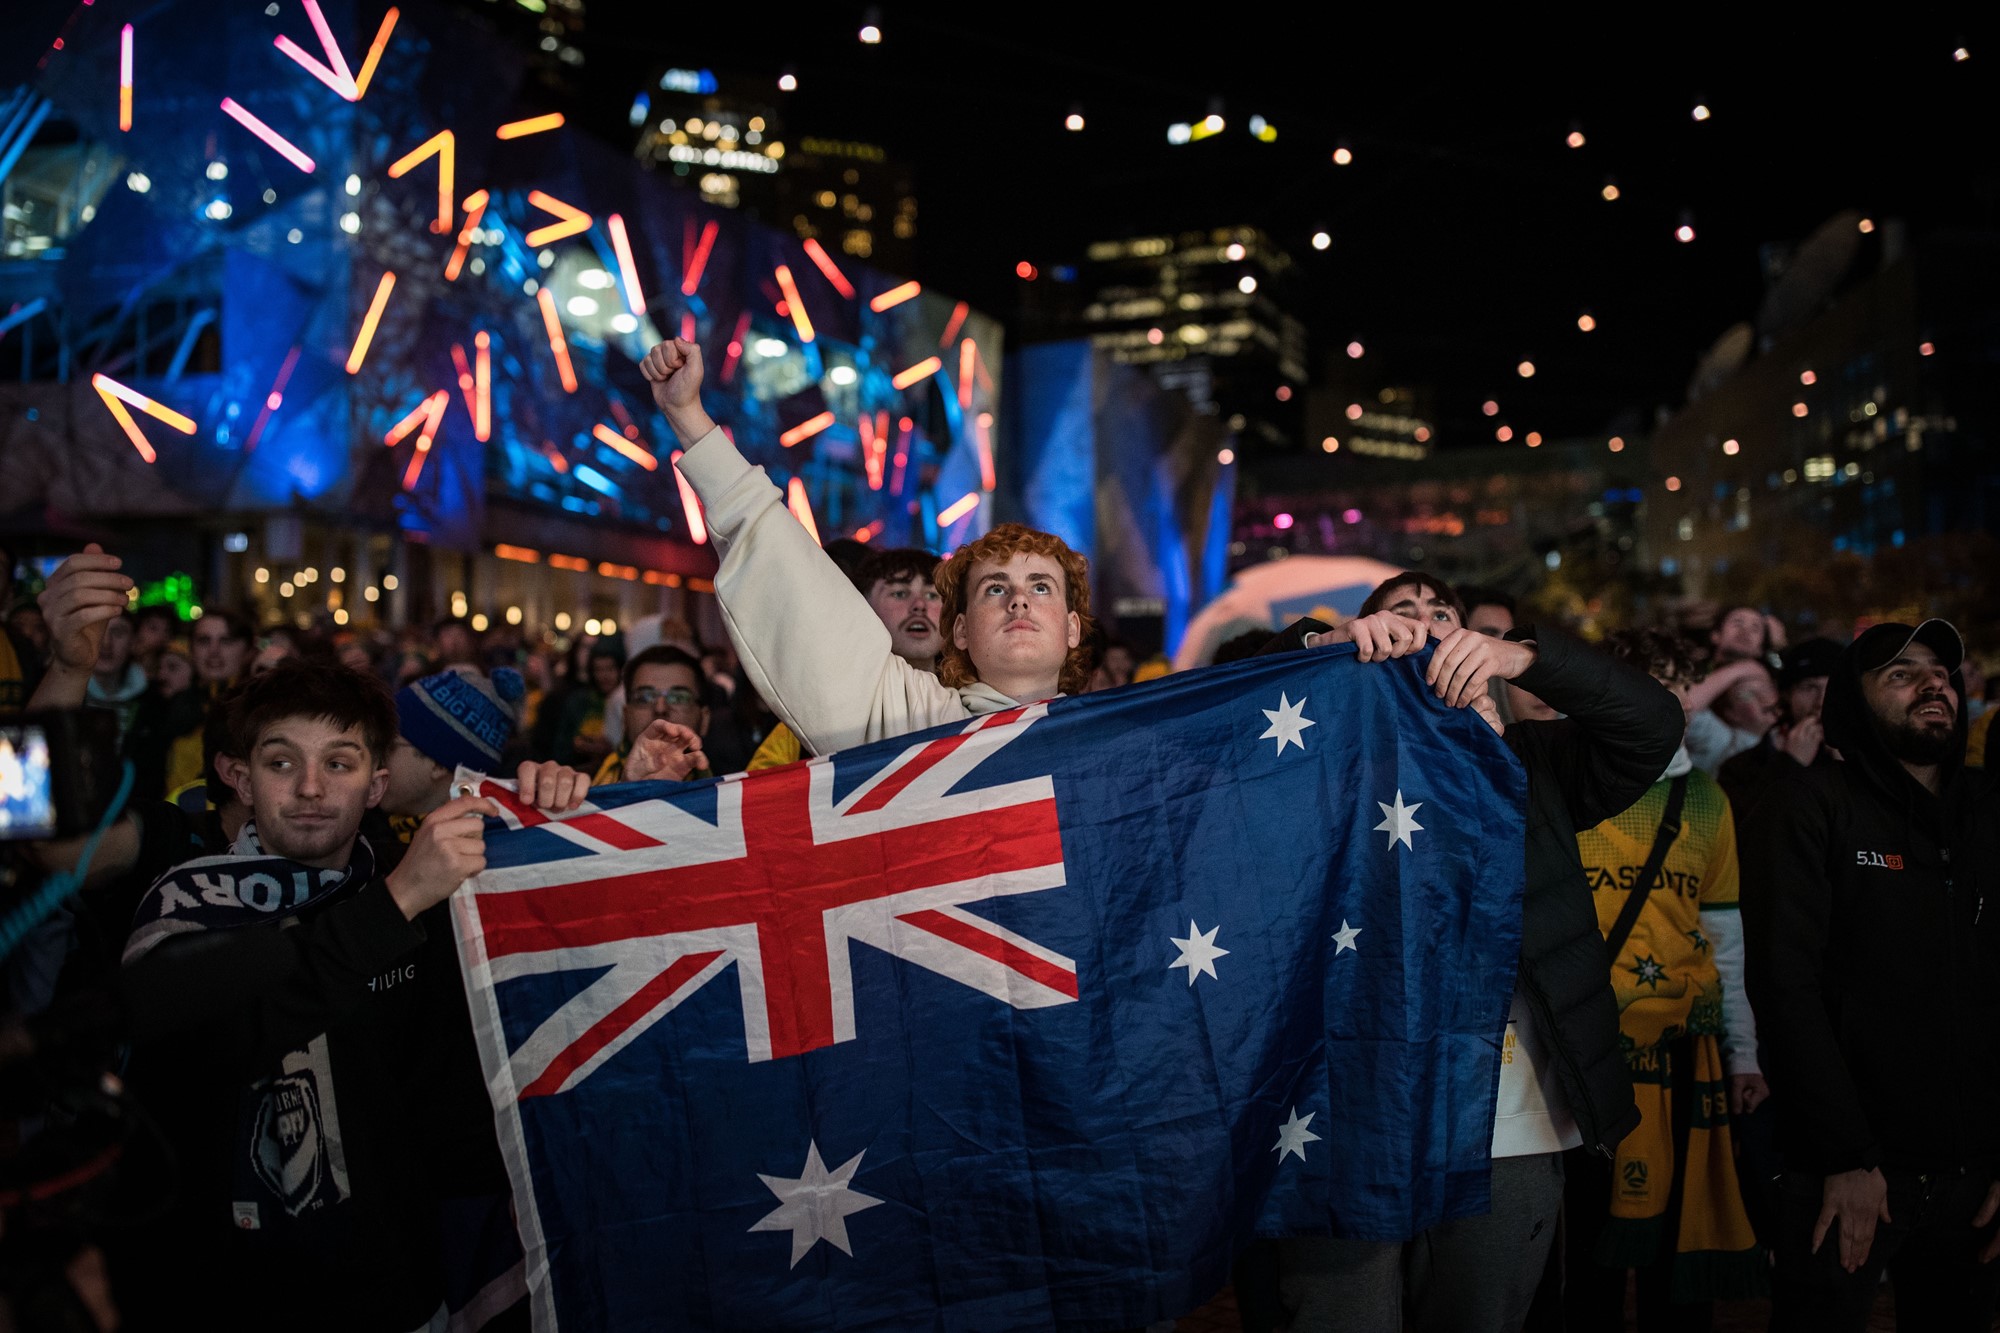 A young man holds up an Australian flag.